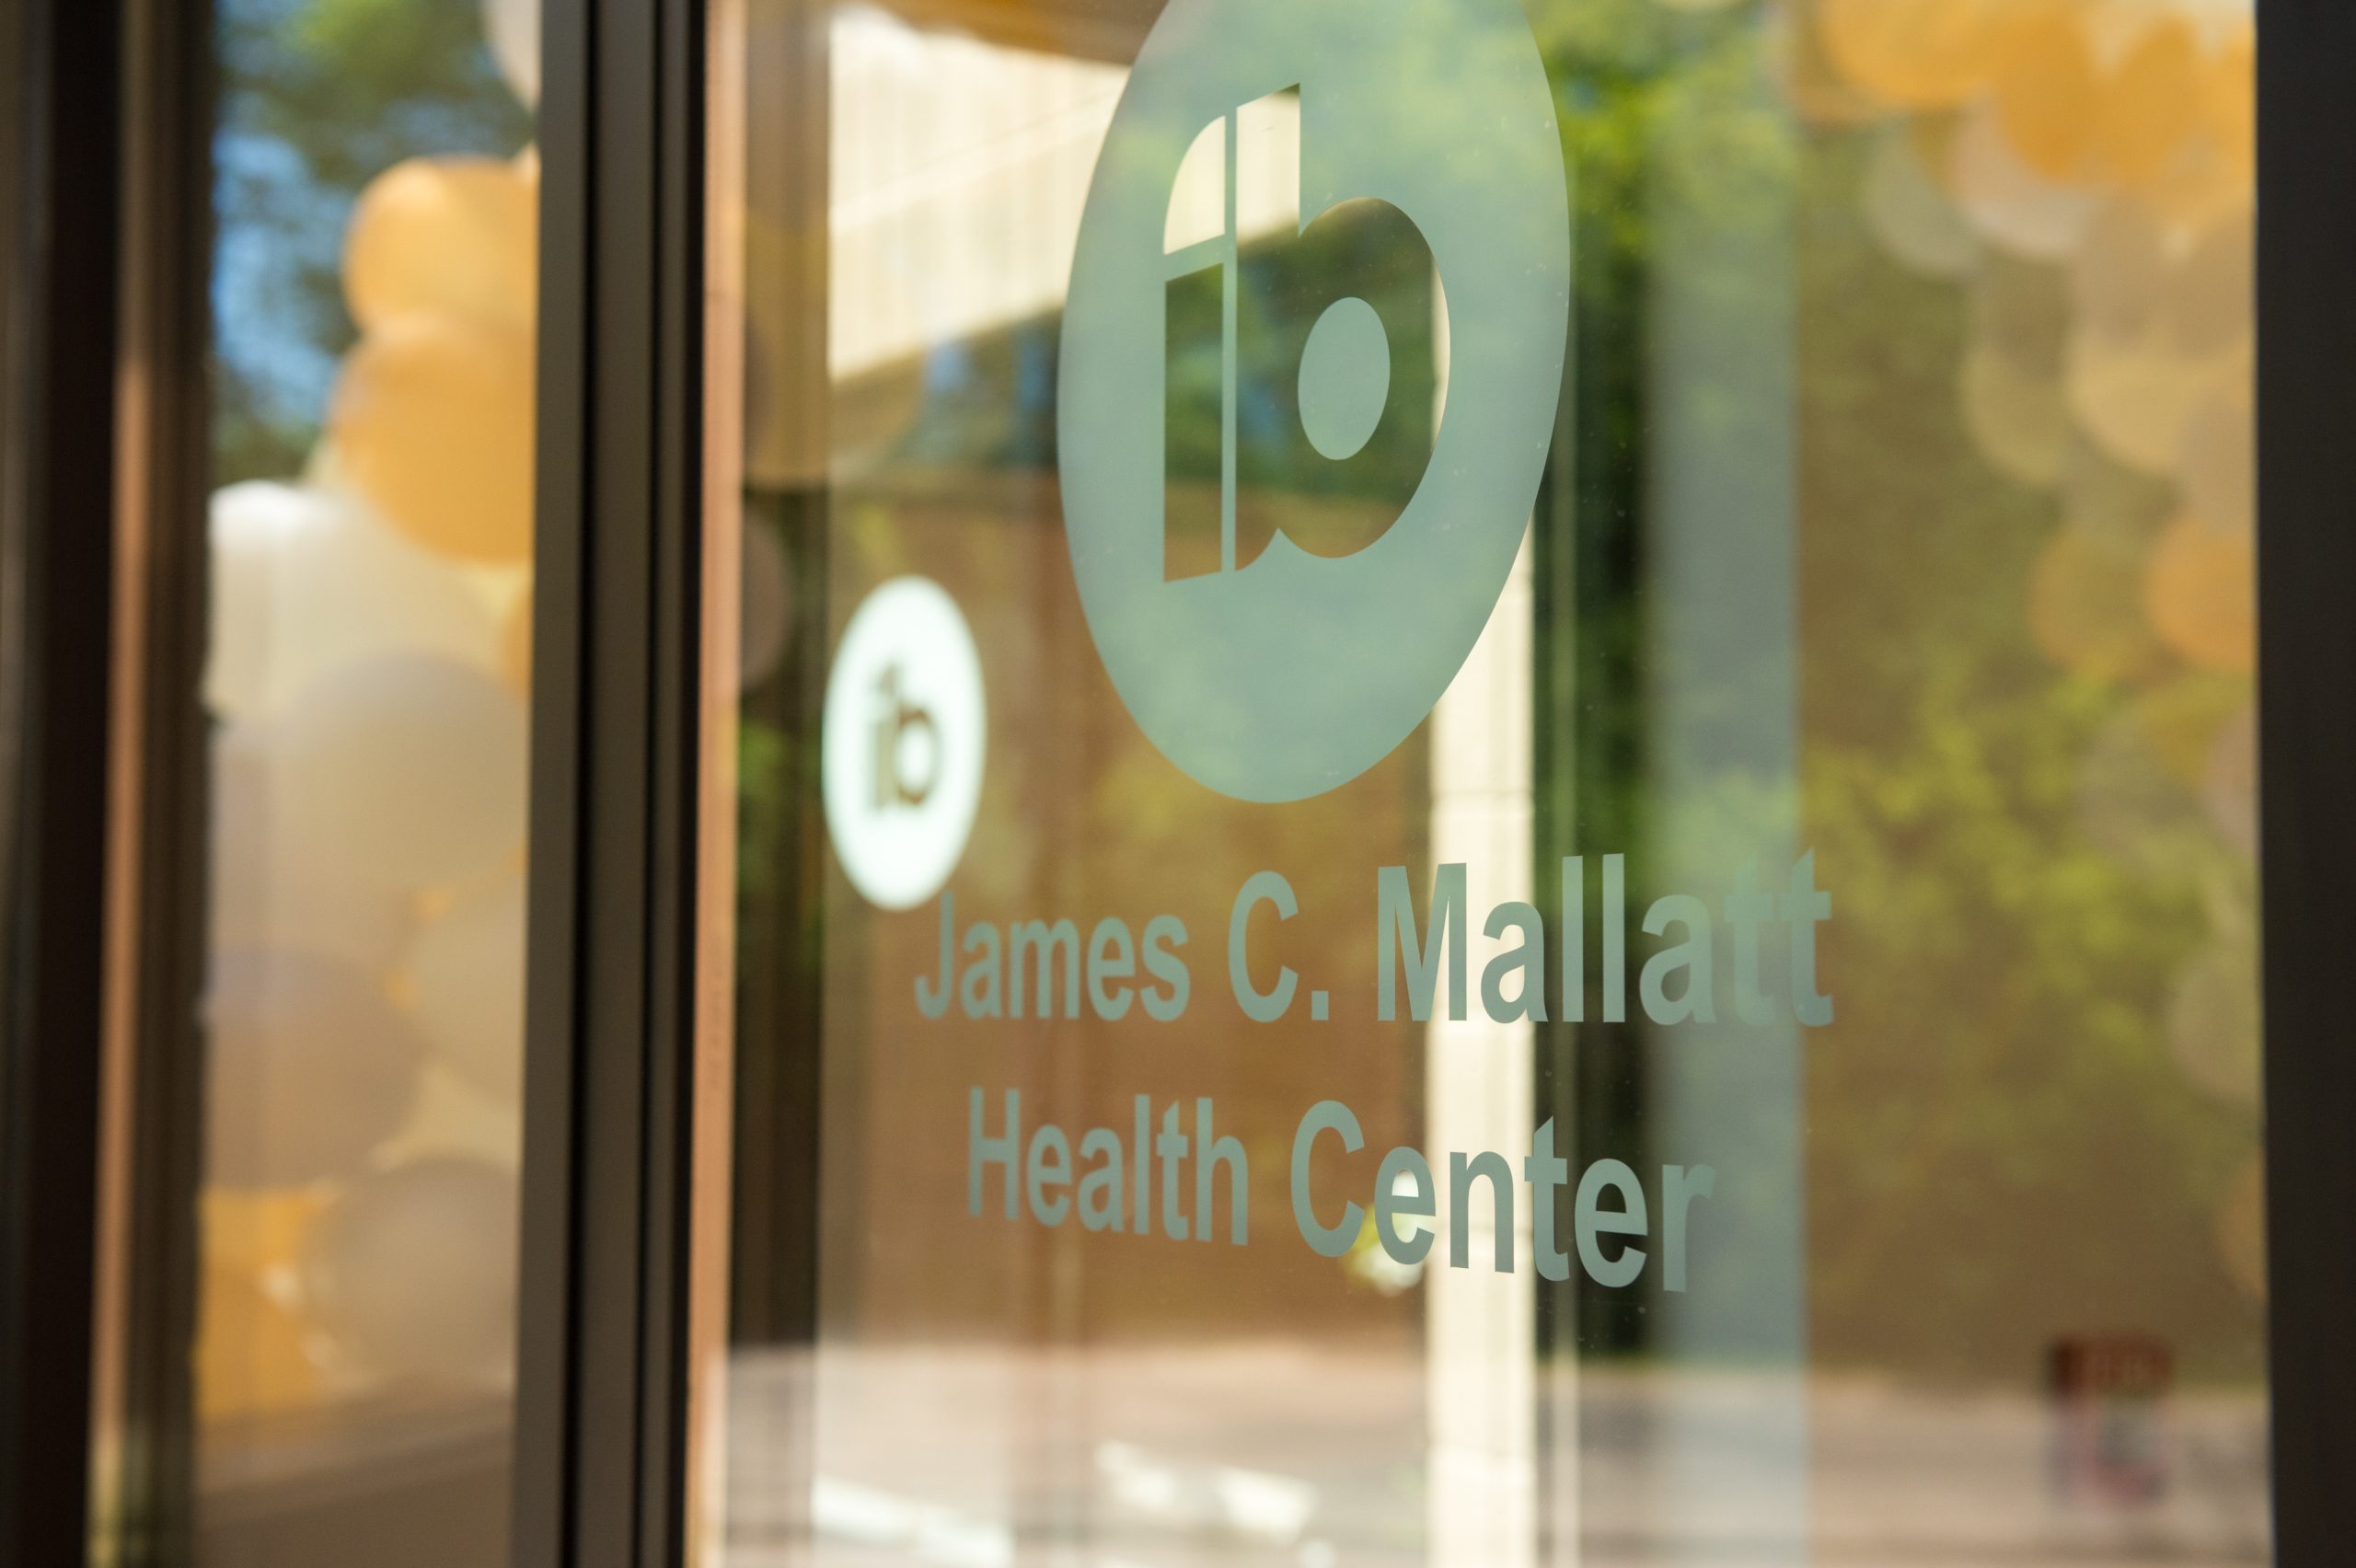 closeup of door that reads "James C. Mallatt Health Center"